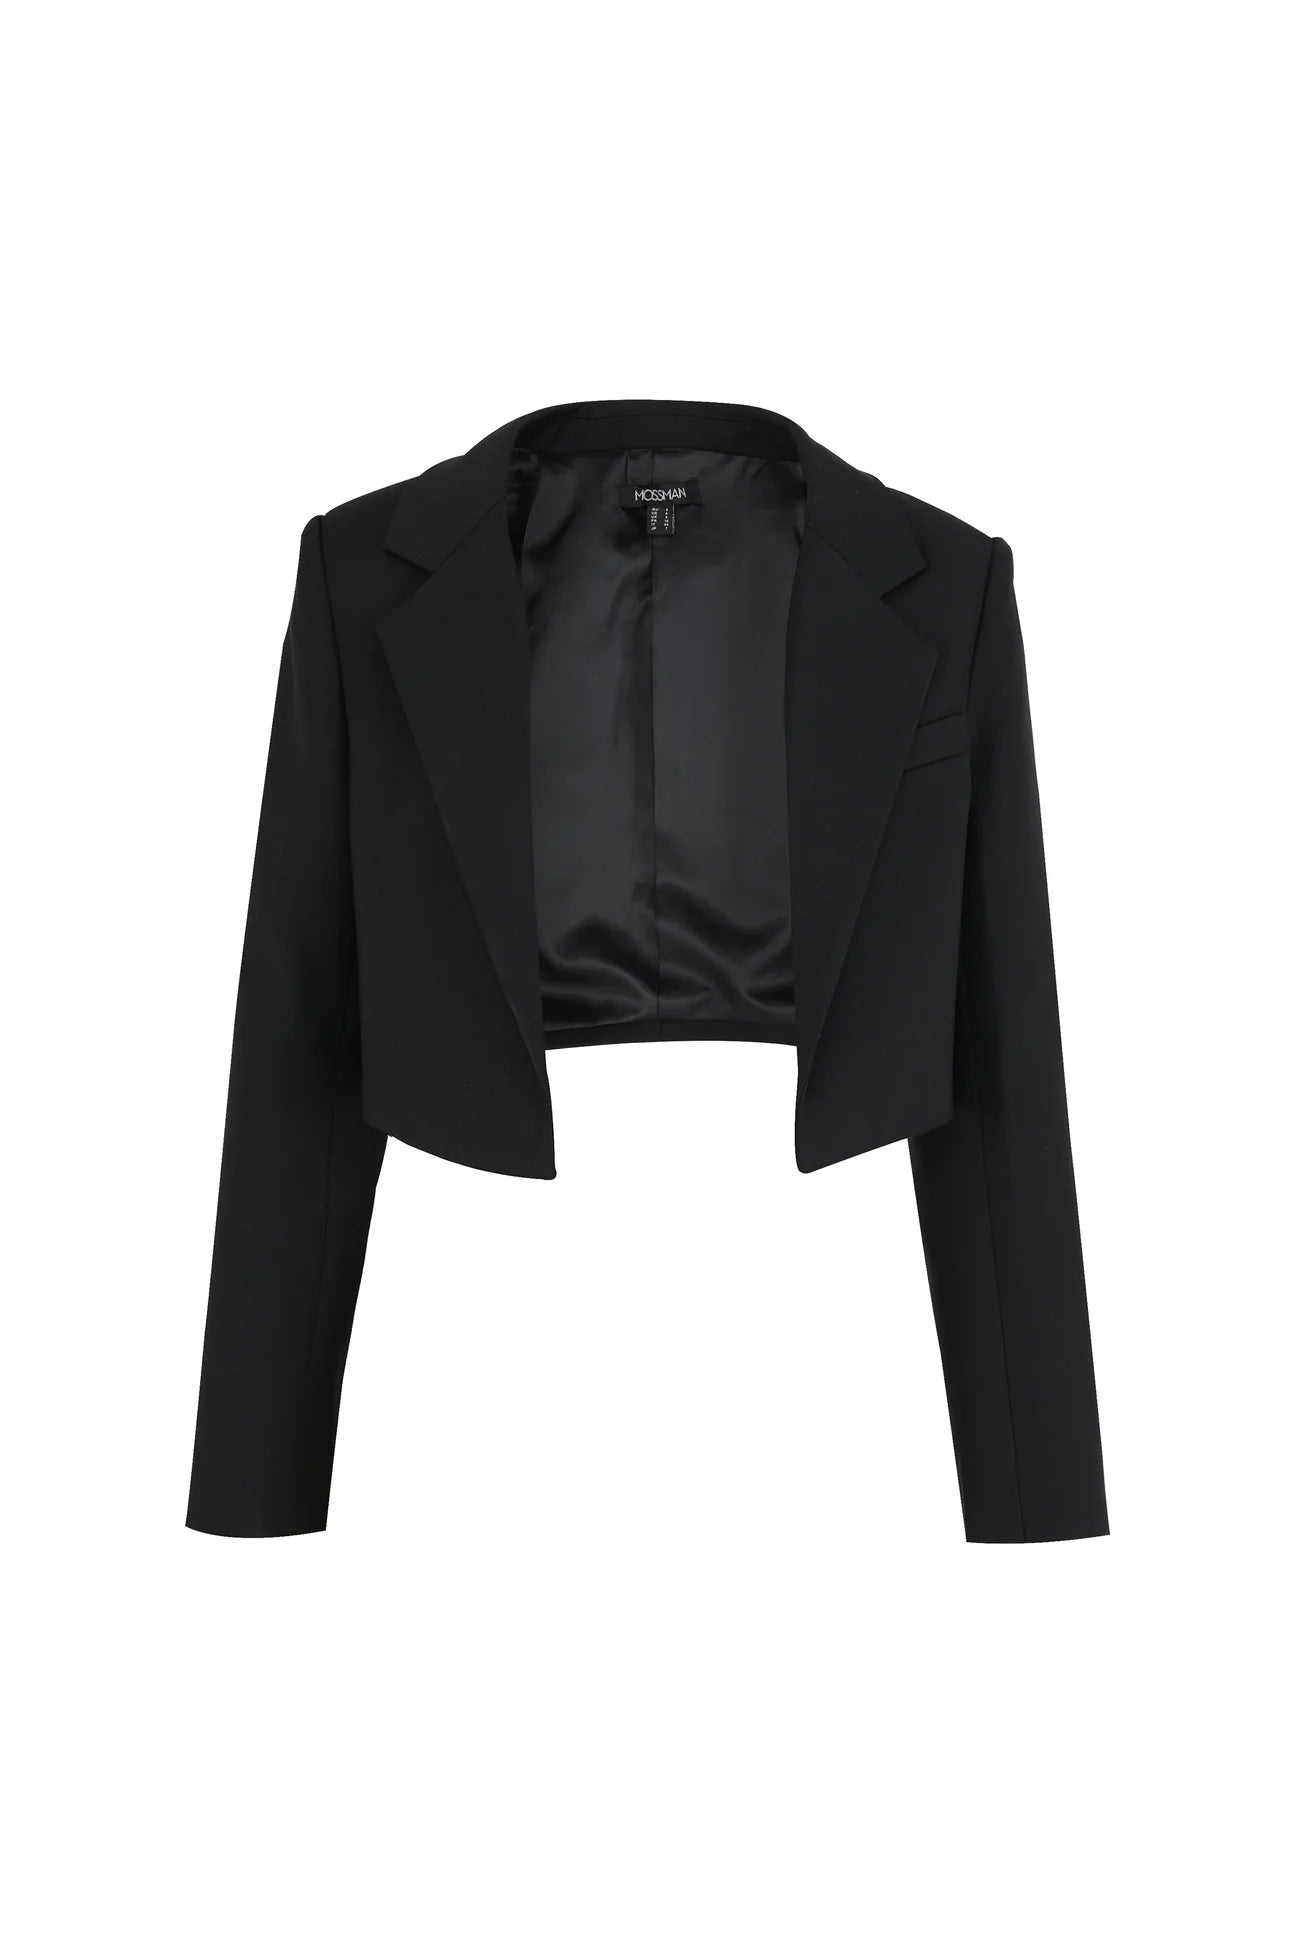 Notting hill cropped blazer, black